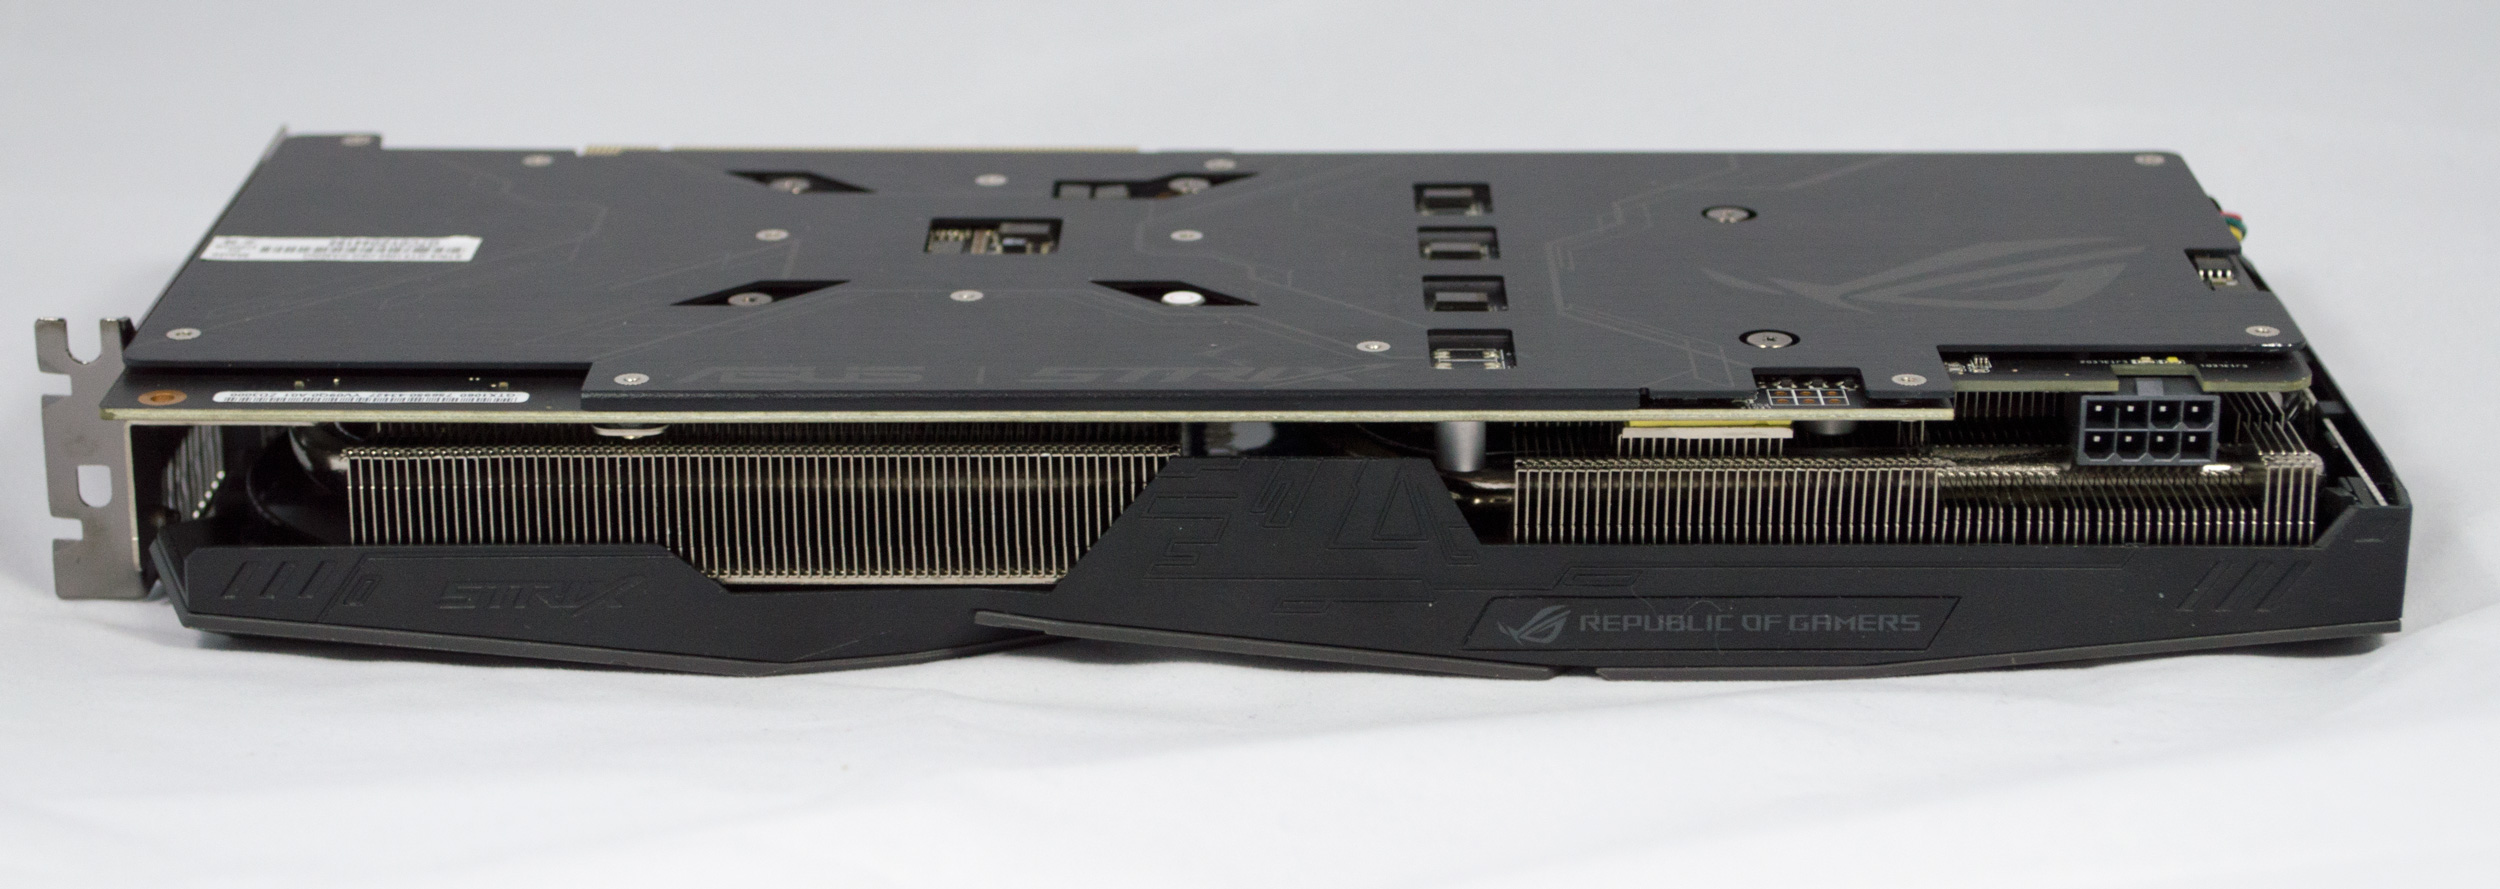 Pump fup til stede Meet the ASUS ROG Strix GeForce GTX 1060 OC - The GeForce GTX 1060 Founders  Edition & ASUS Strix GTX 1060 Review